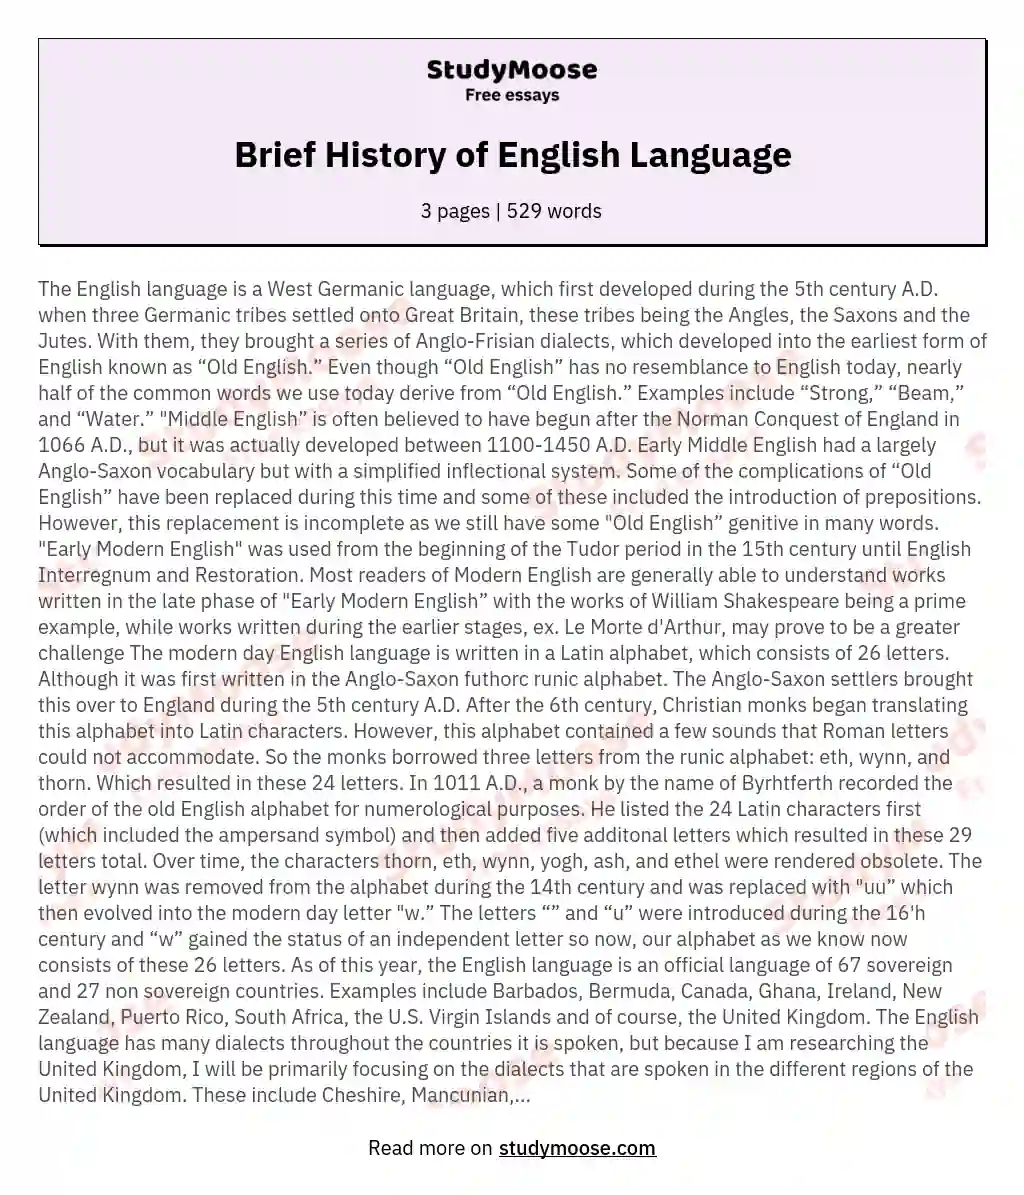 Brief History of English Language essay